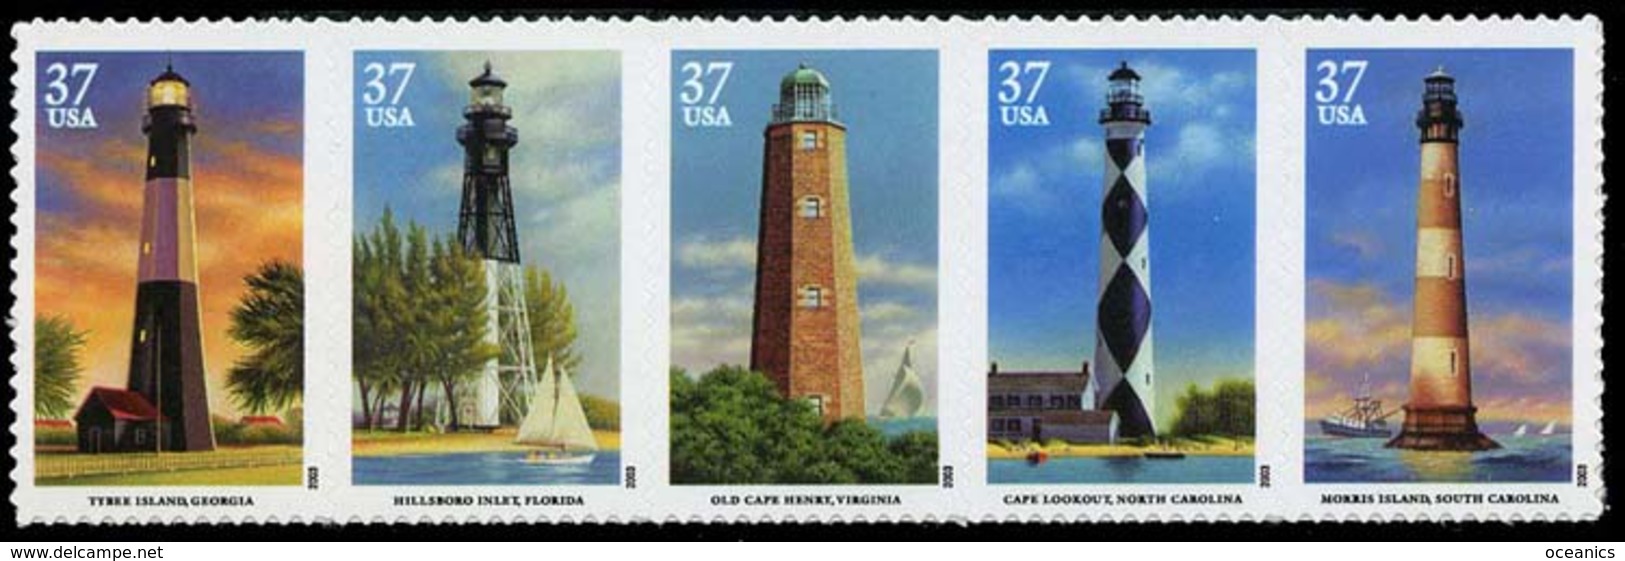 Etats-Unis / United States (Scott No.3791 - Southeastern Lighthousese) [**] - Unused Stamps